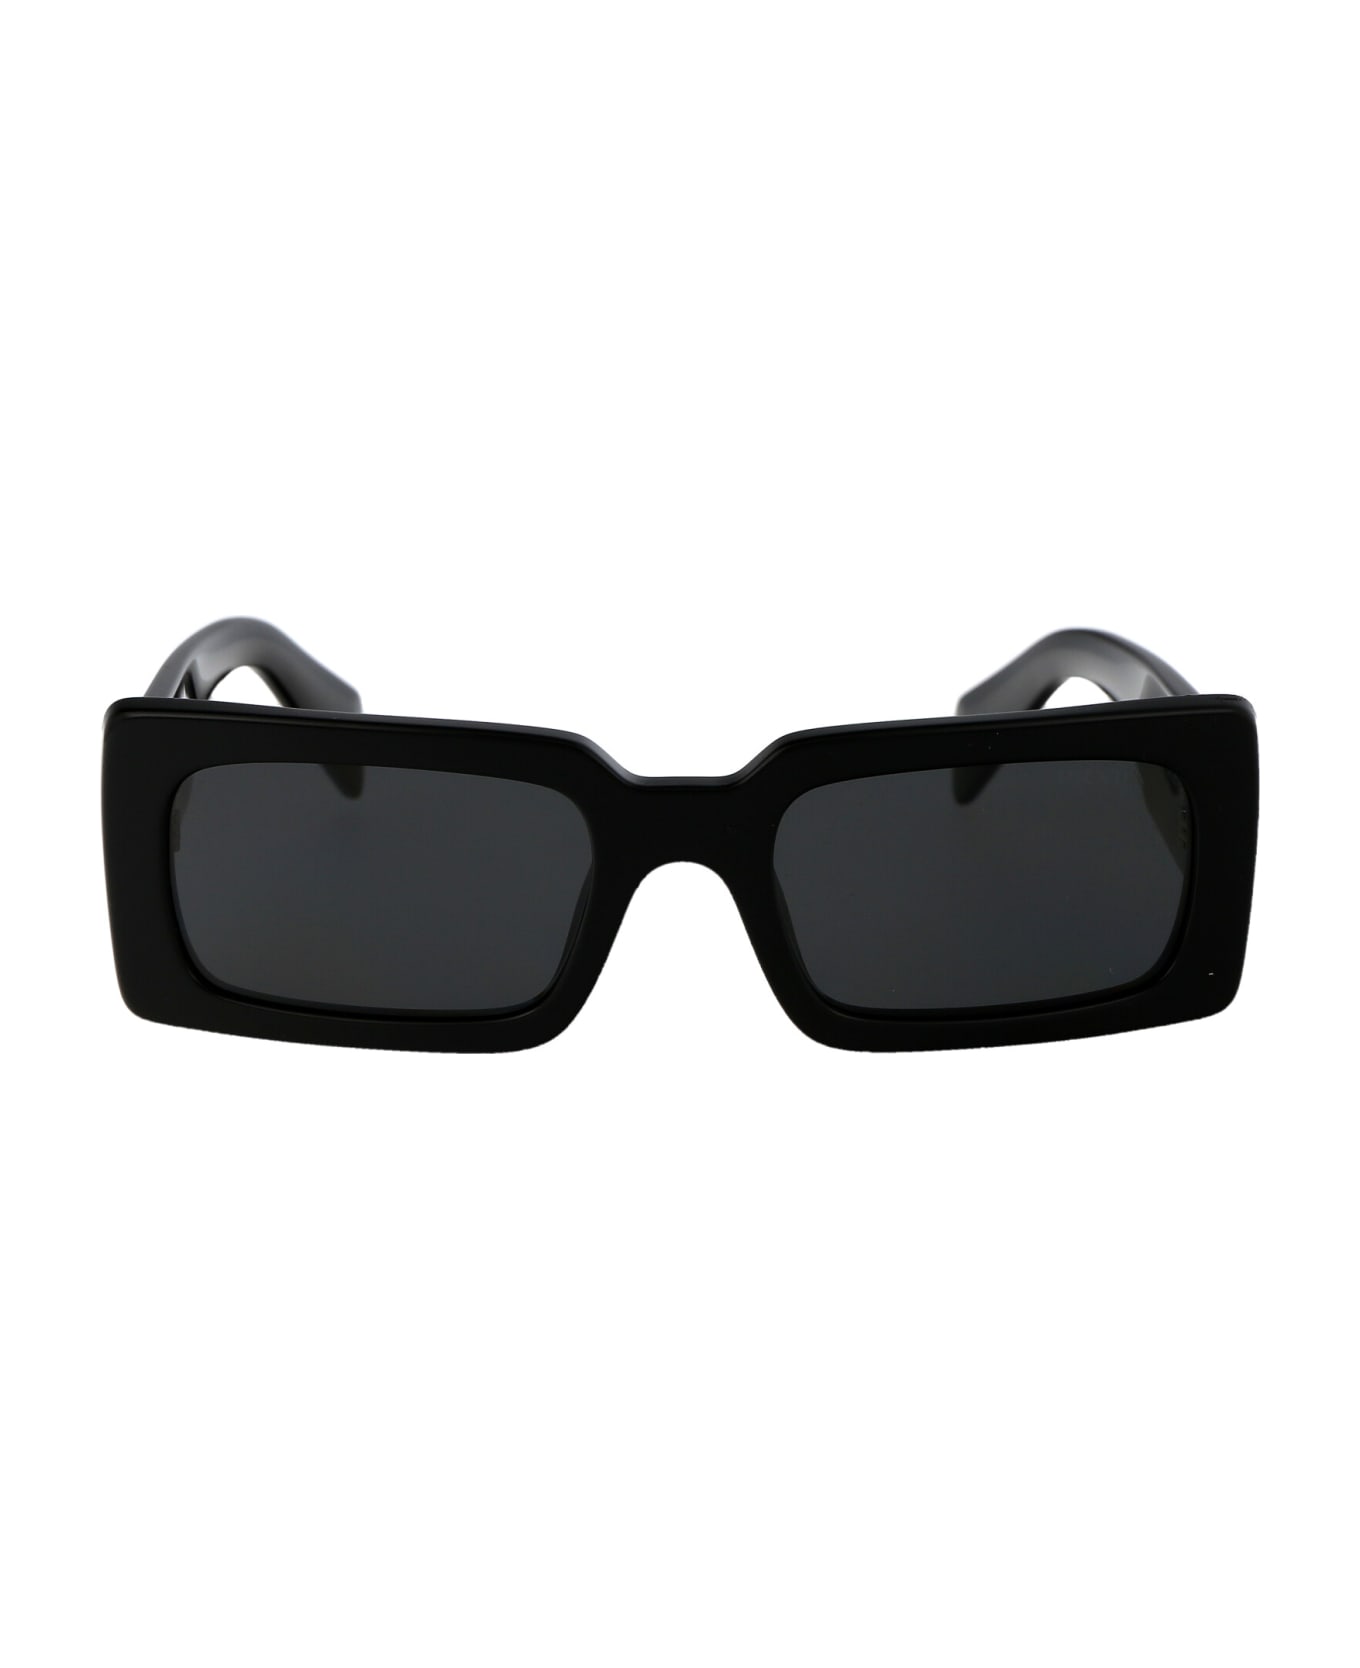 Prada Eyewear 0pr A07s Sunglasses - 1AB5S0 BLACK